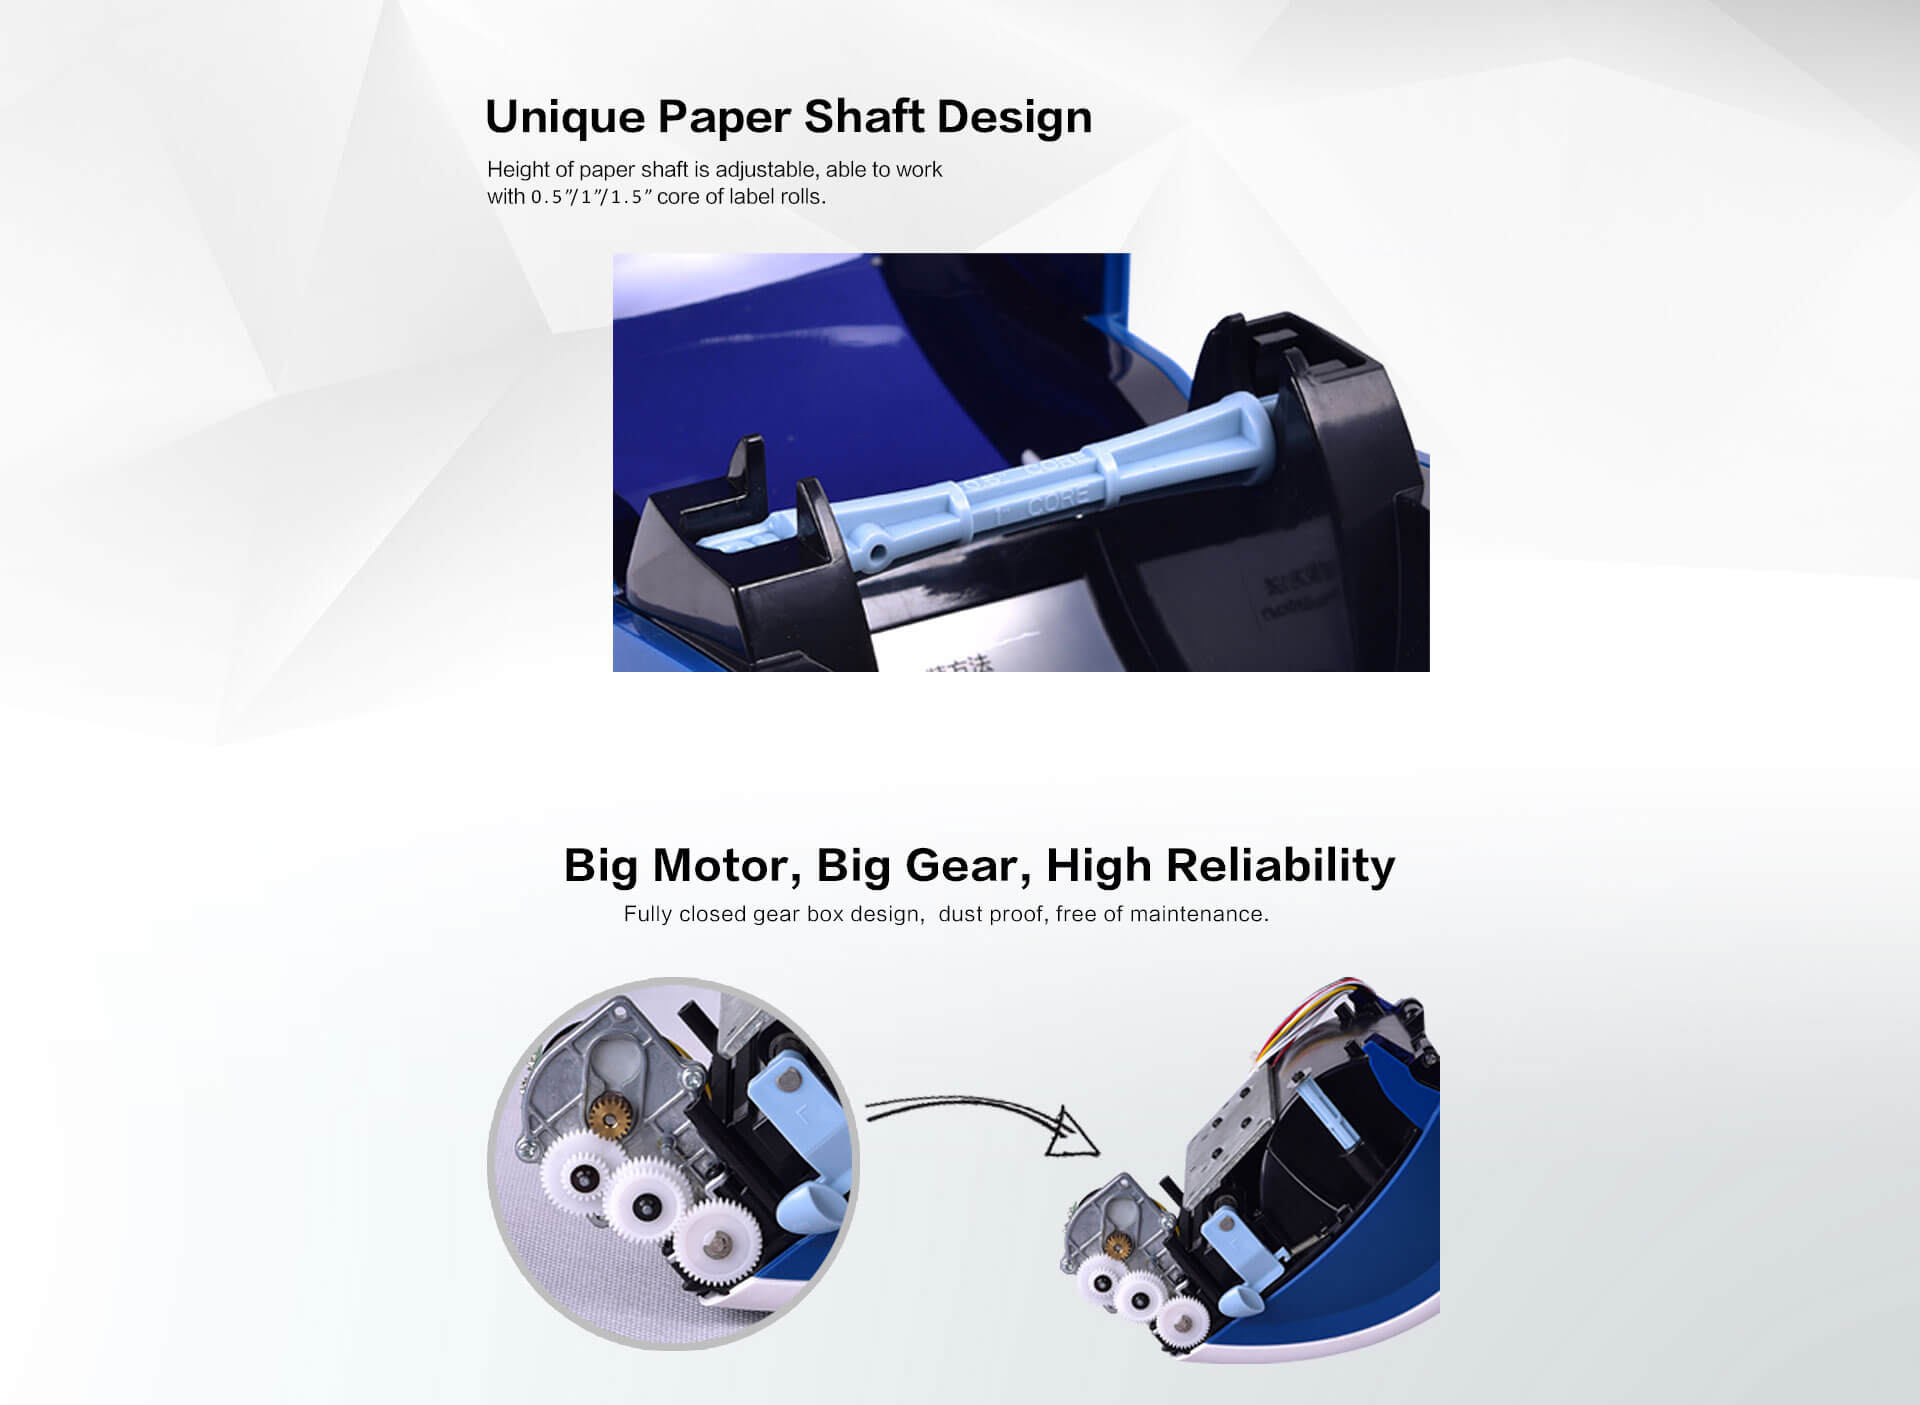 HPRT LPQ80 label printer paper shaft